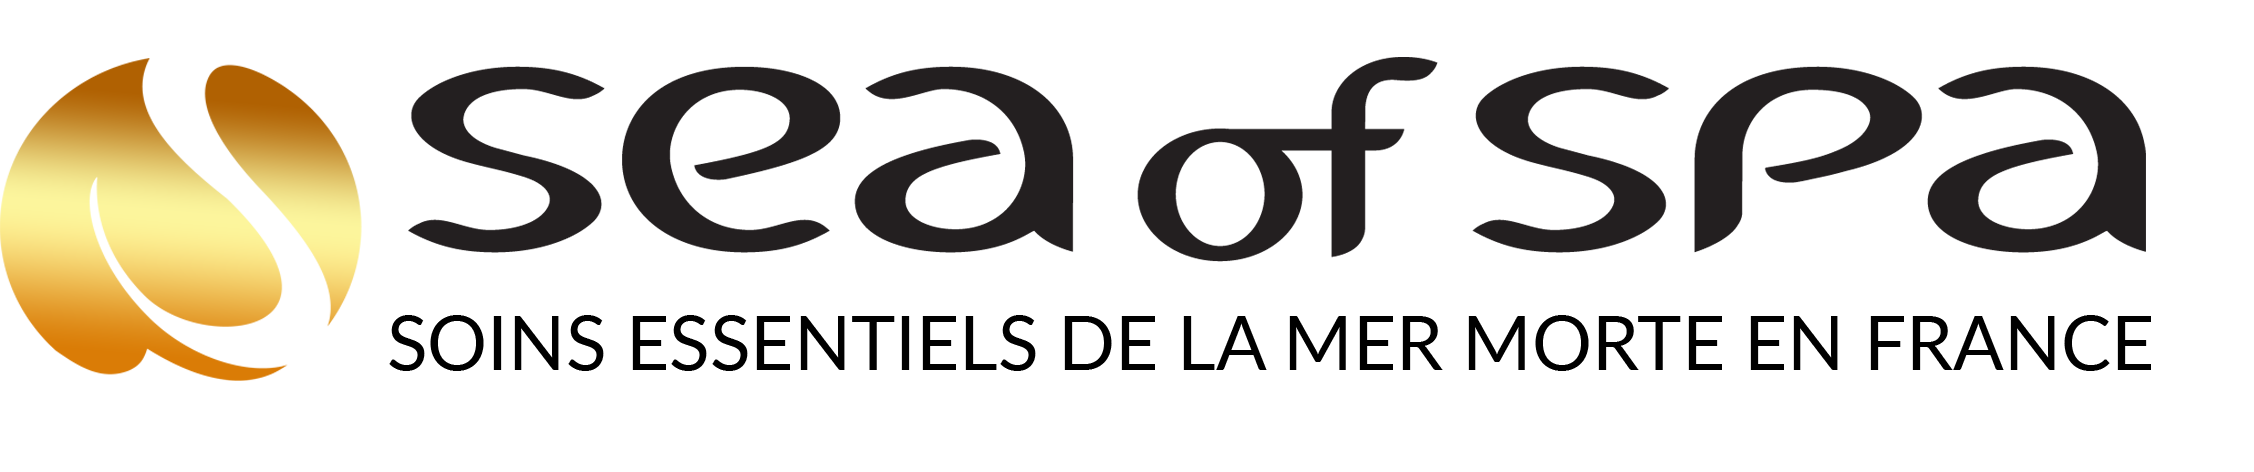 logo Sea of spa